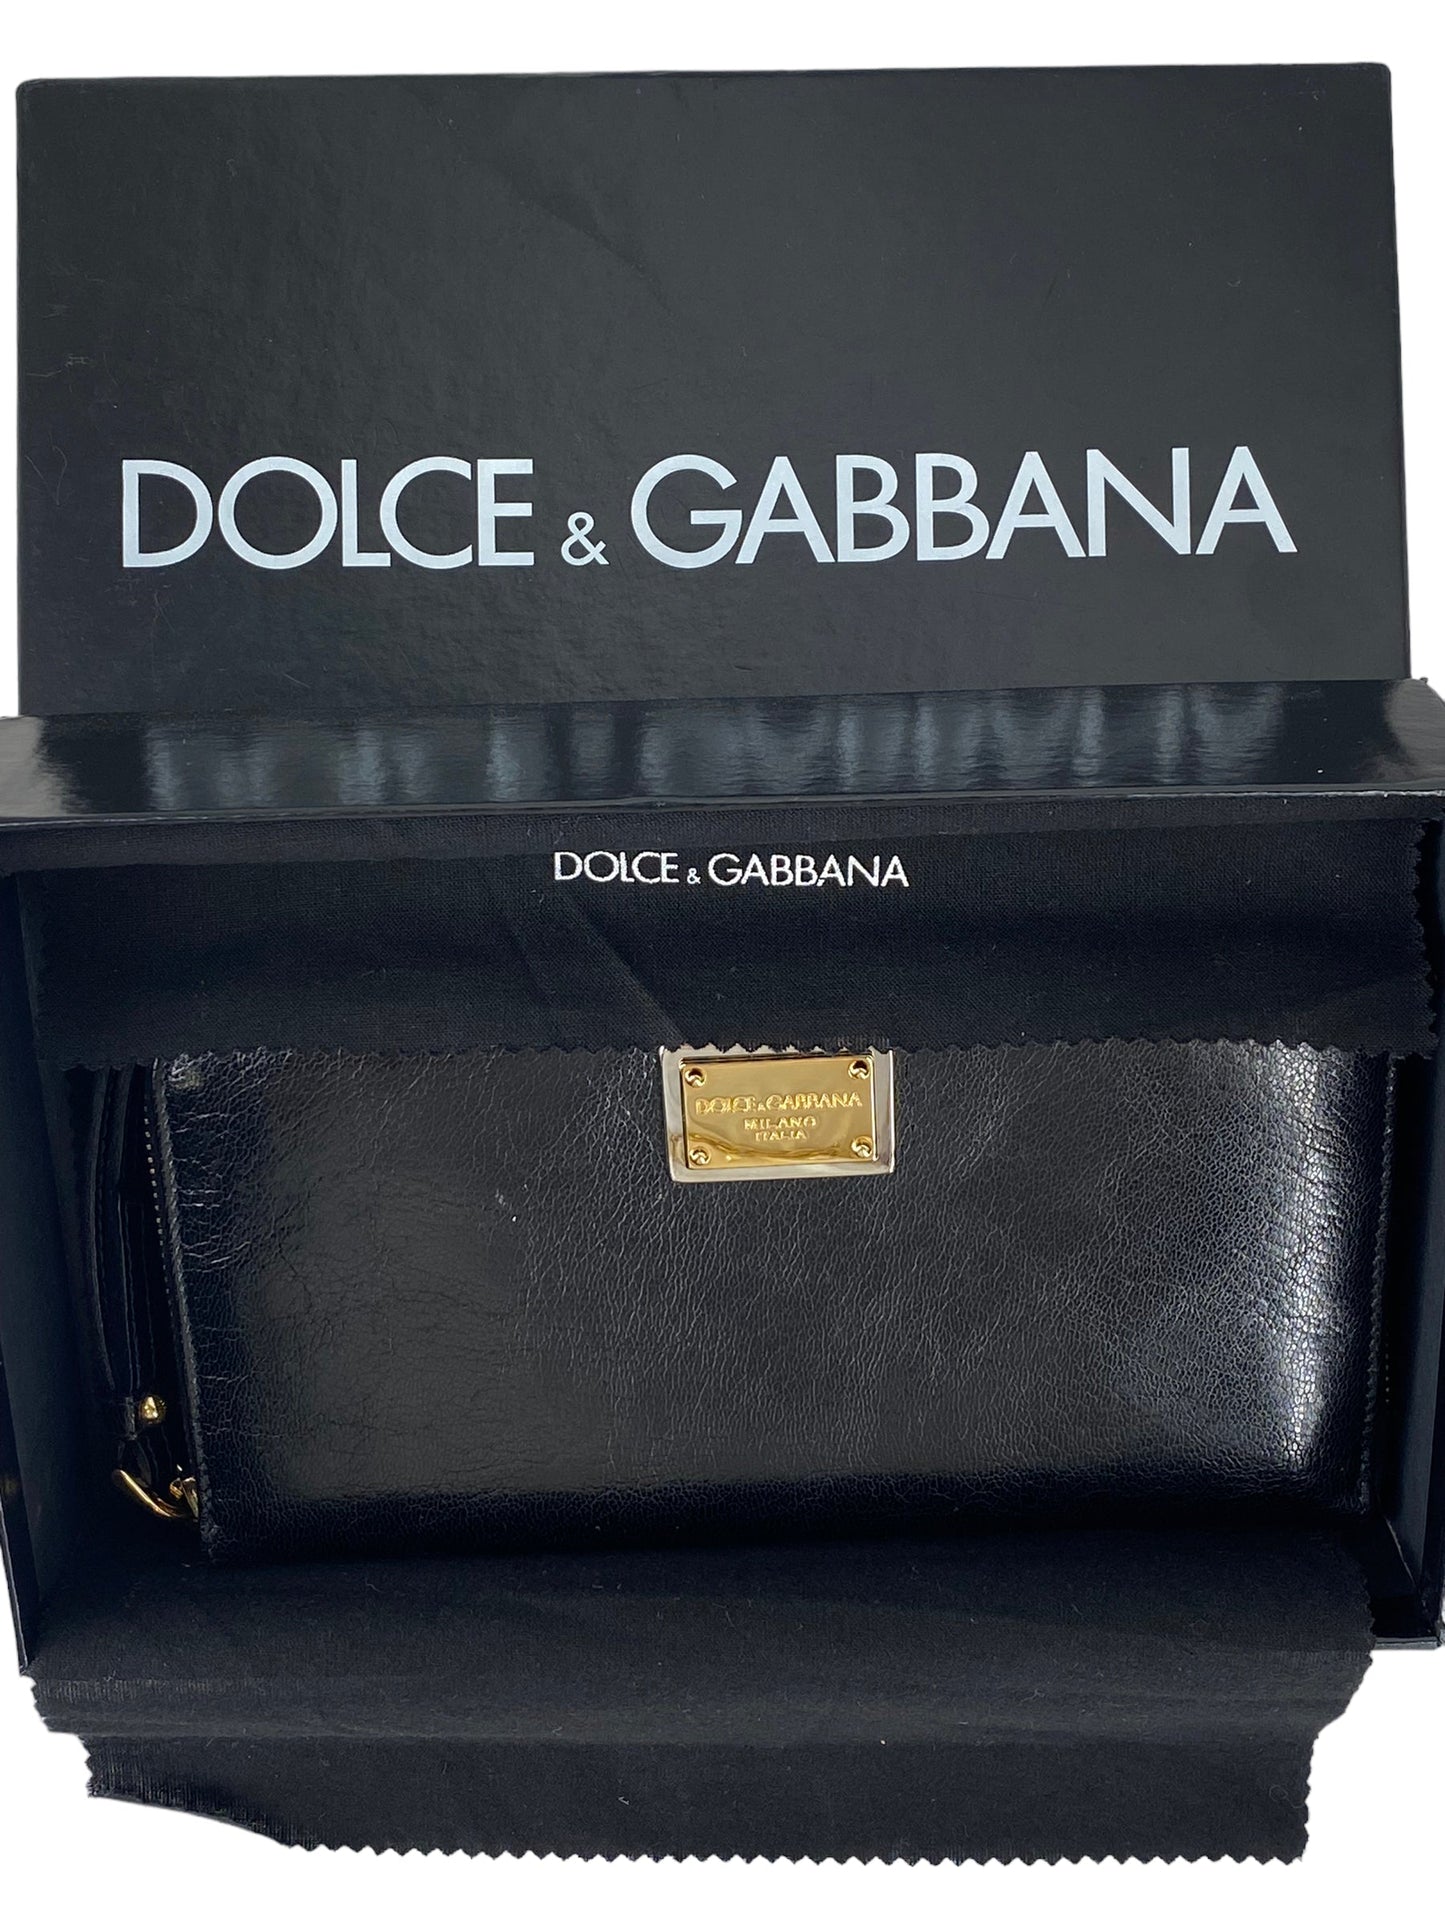 Wallet Designer By Dolce And Gabbana  Size: Medium